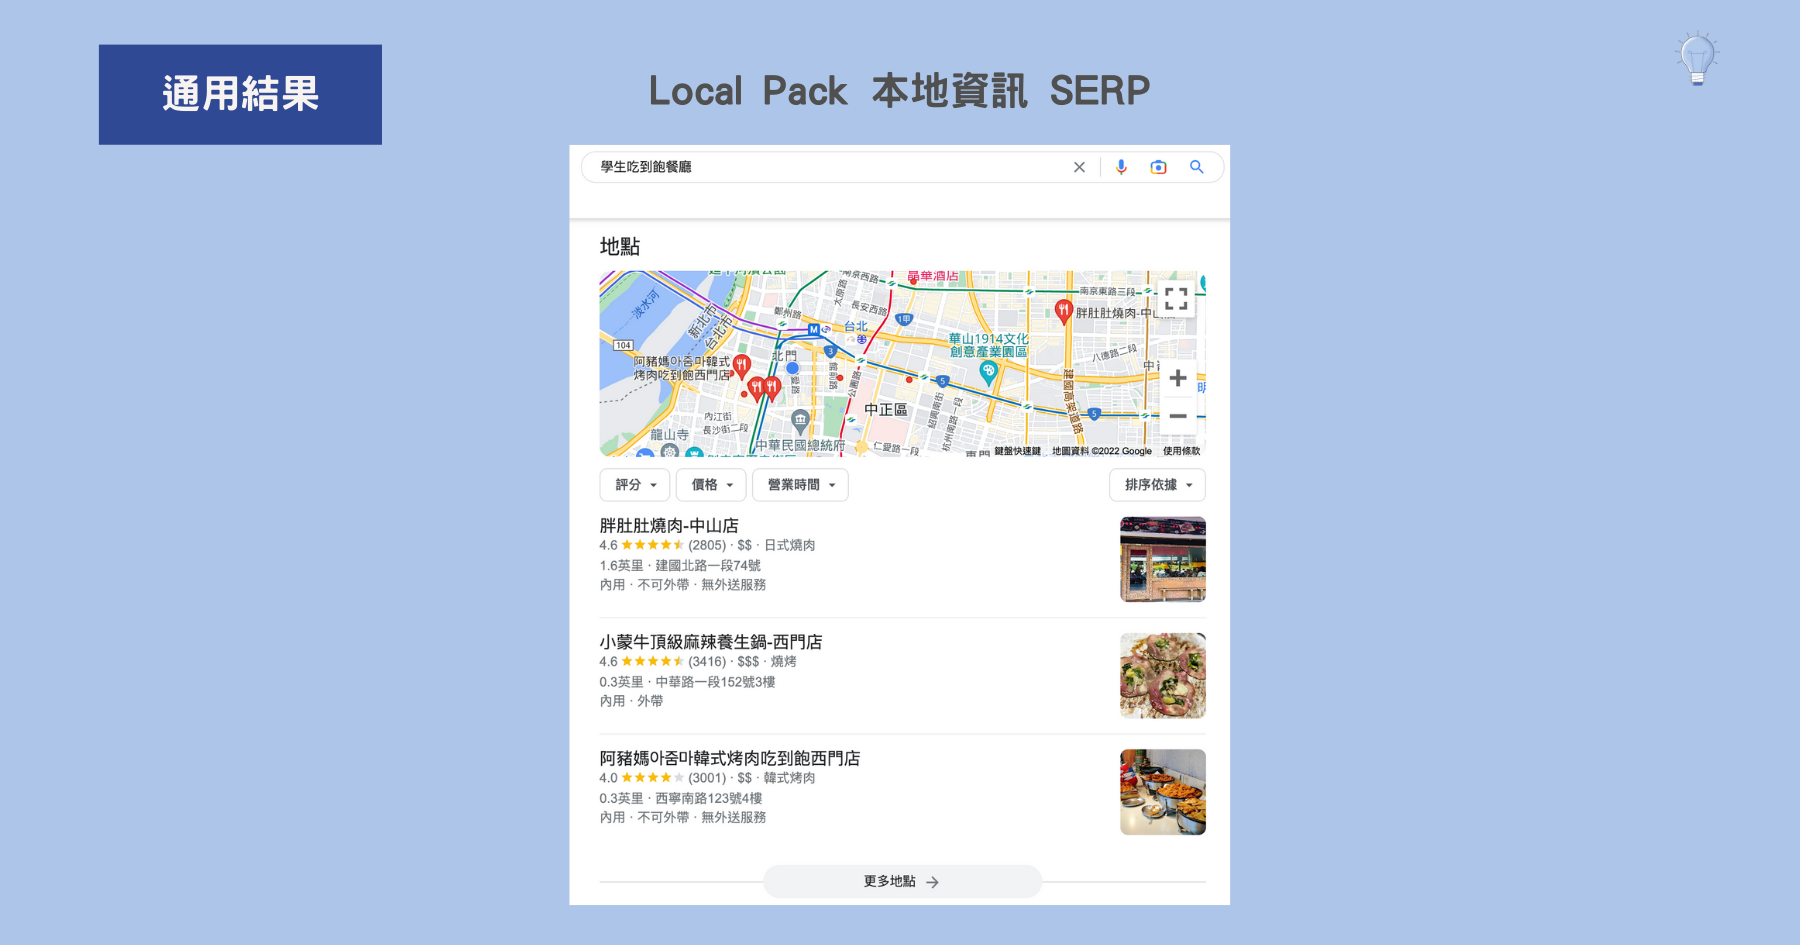 Local Pack 本地資訊 SERP